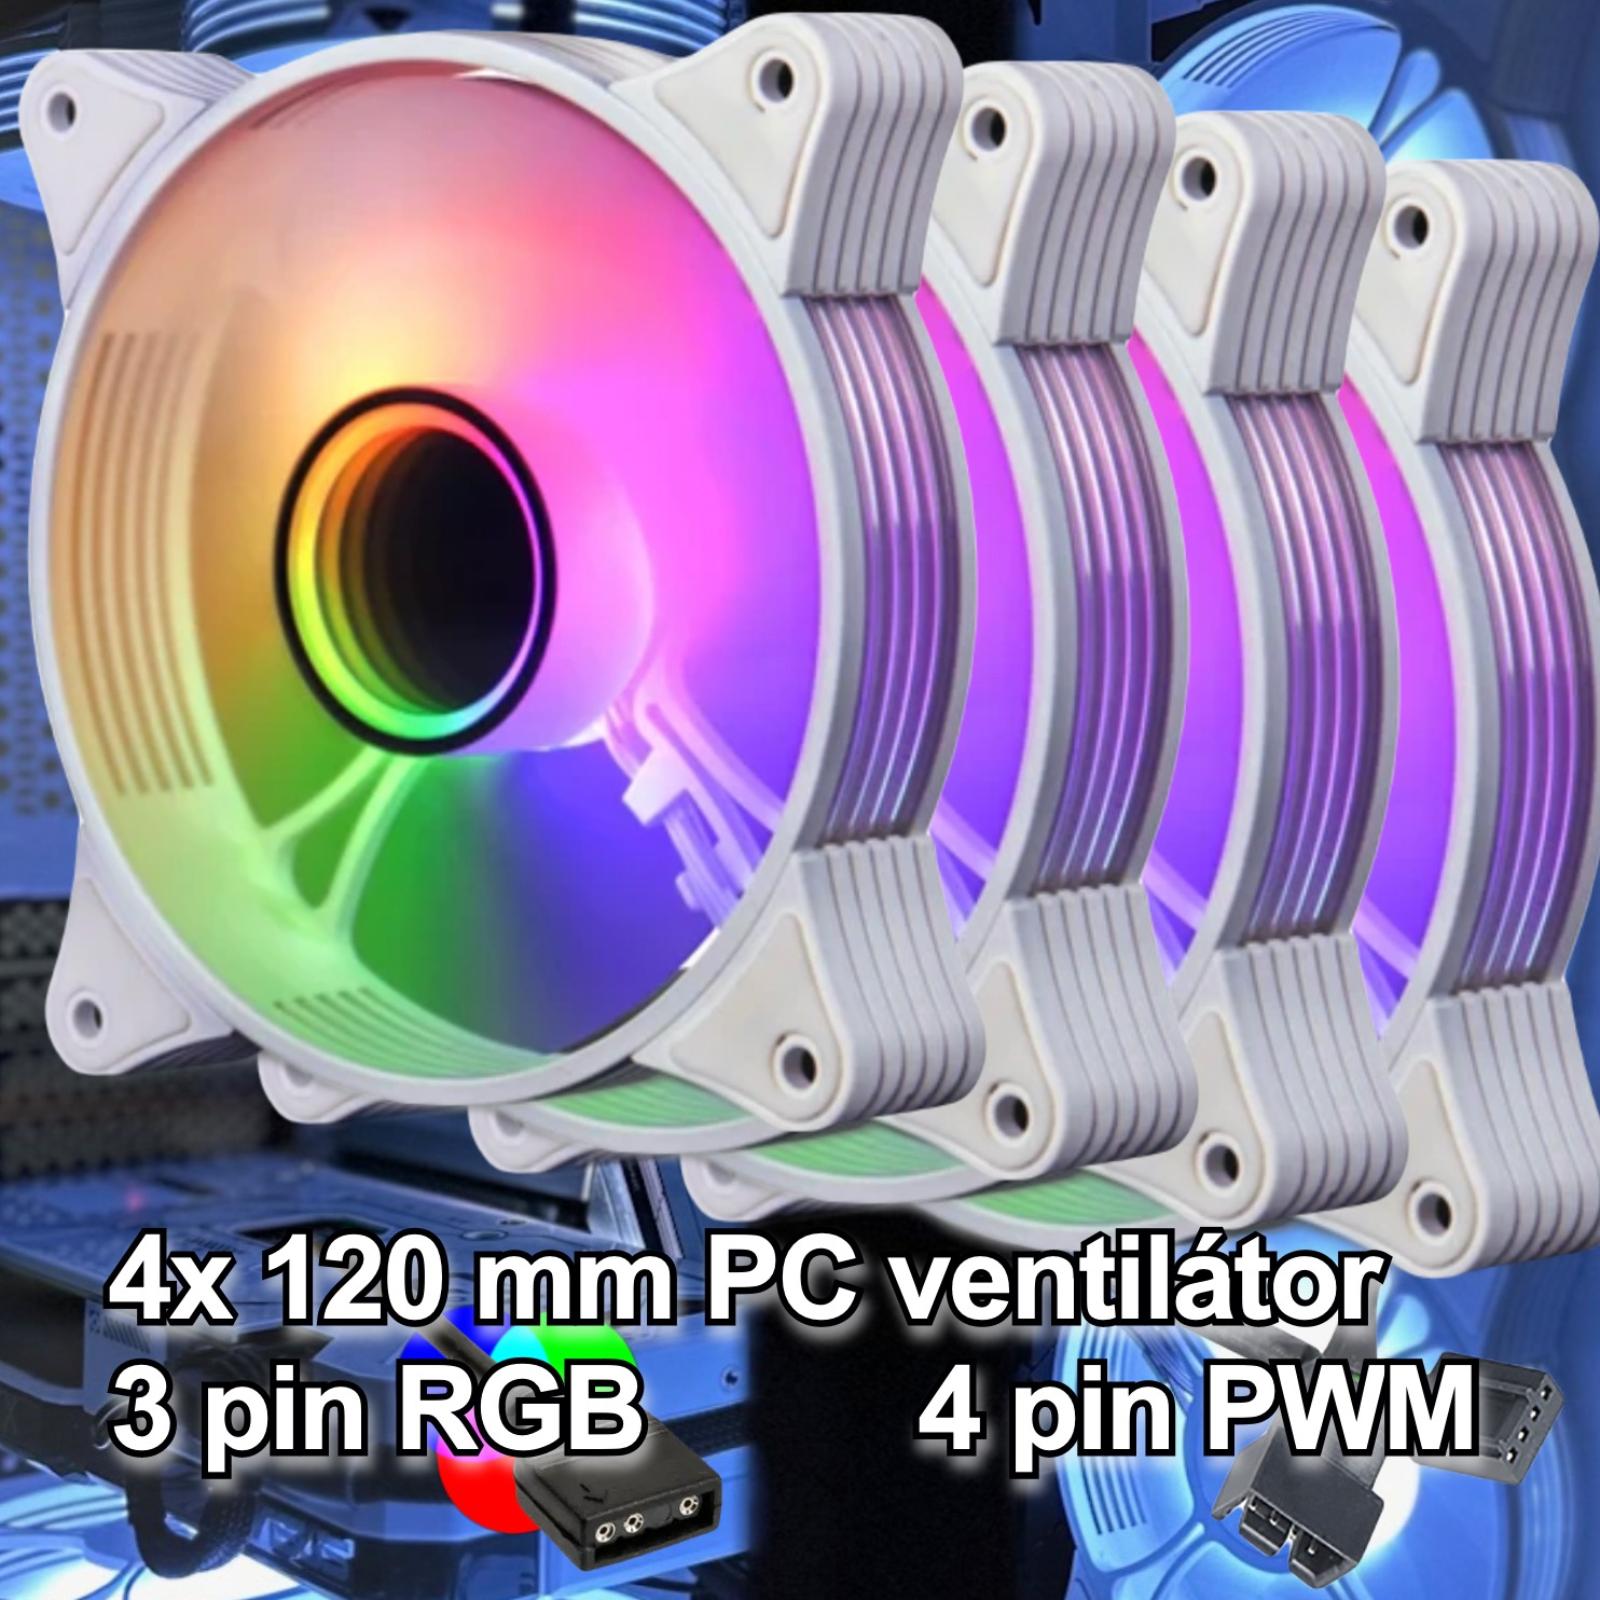 Bílý RGB PC větráček ventilátor 120mm 5V 3 pin aRGB, PWM 4pin (4x) - Počítače a hry